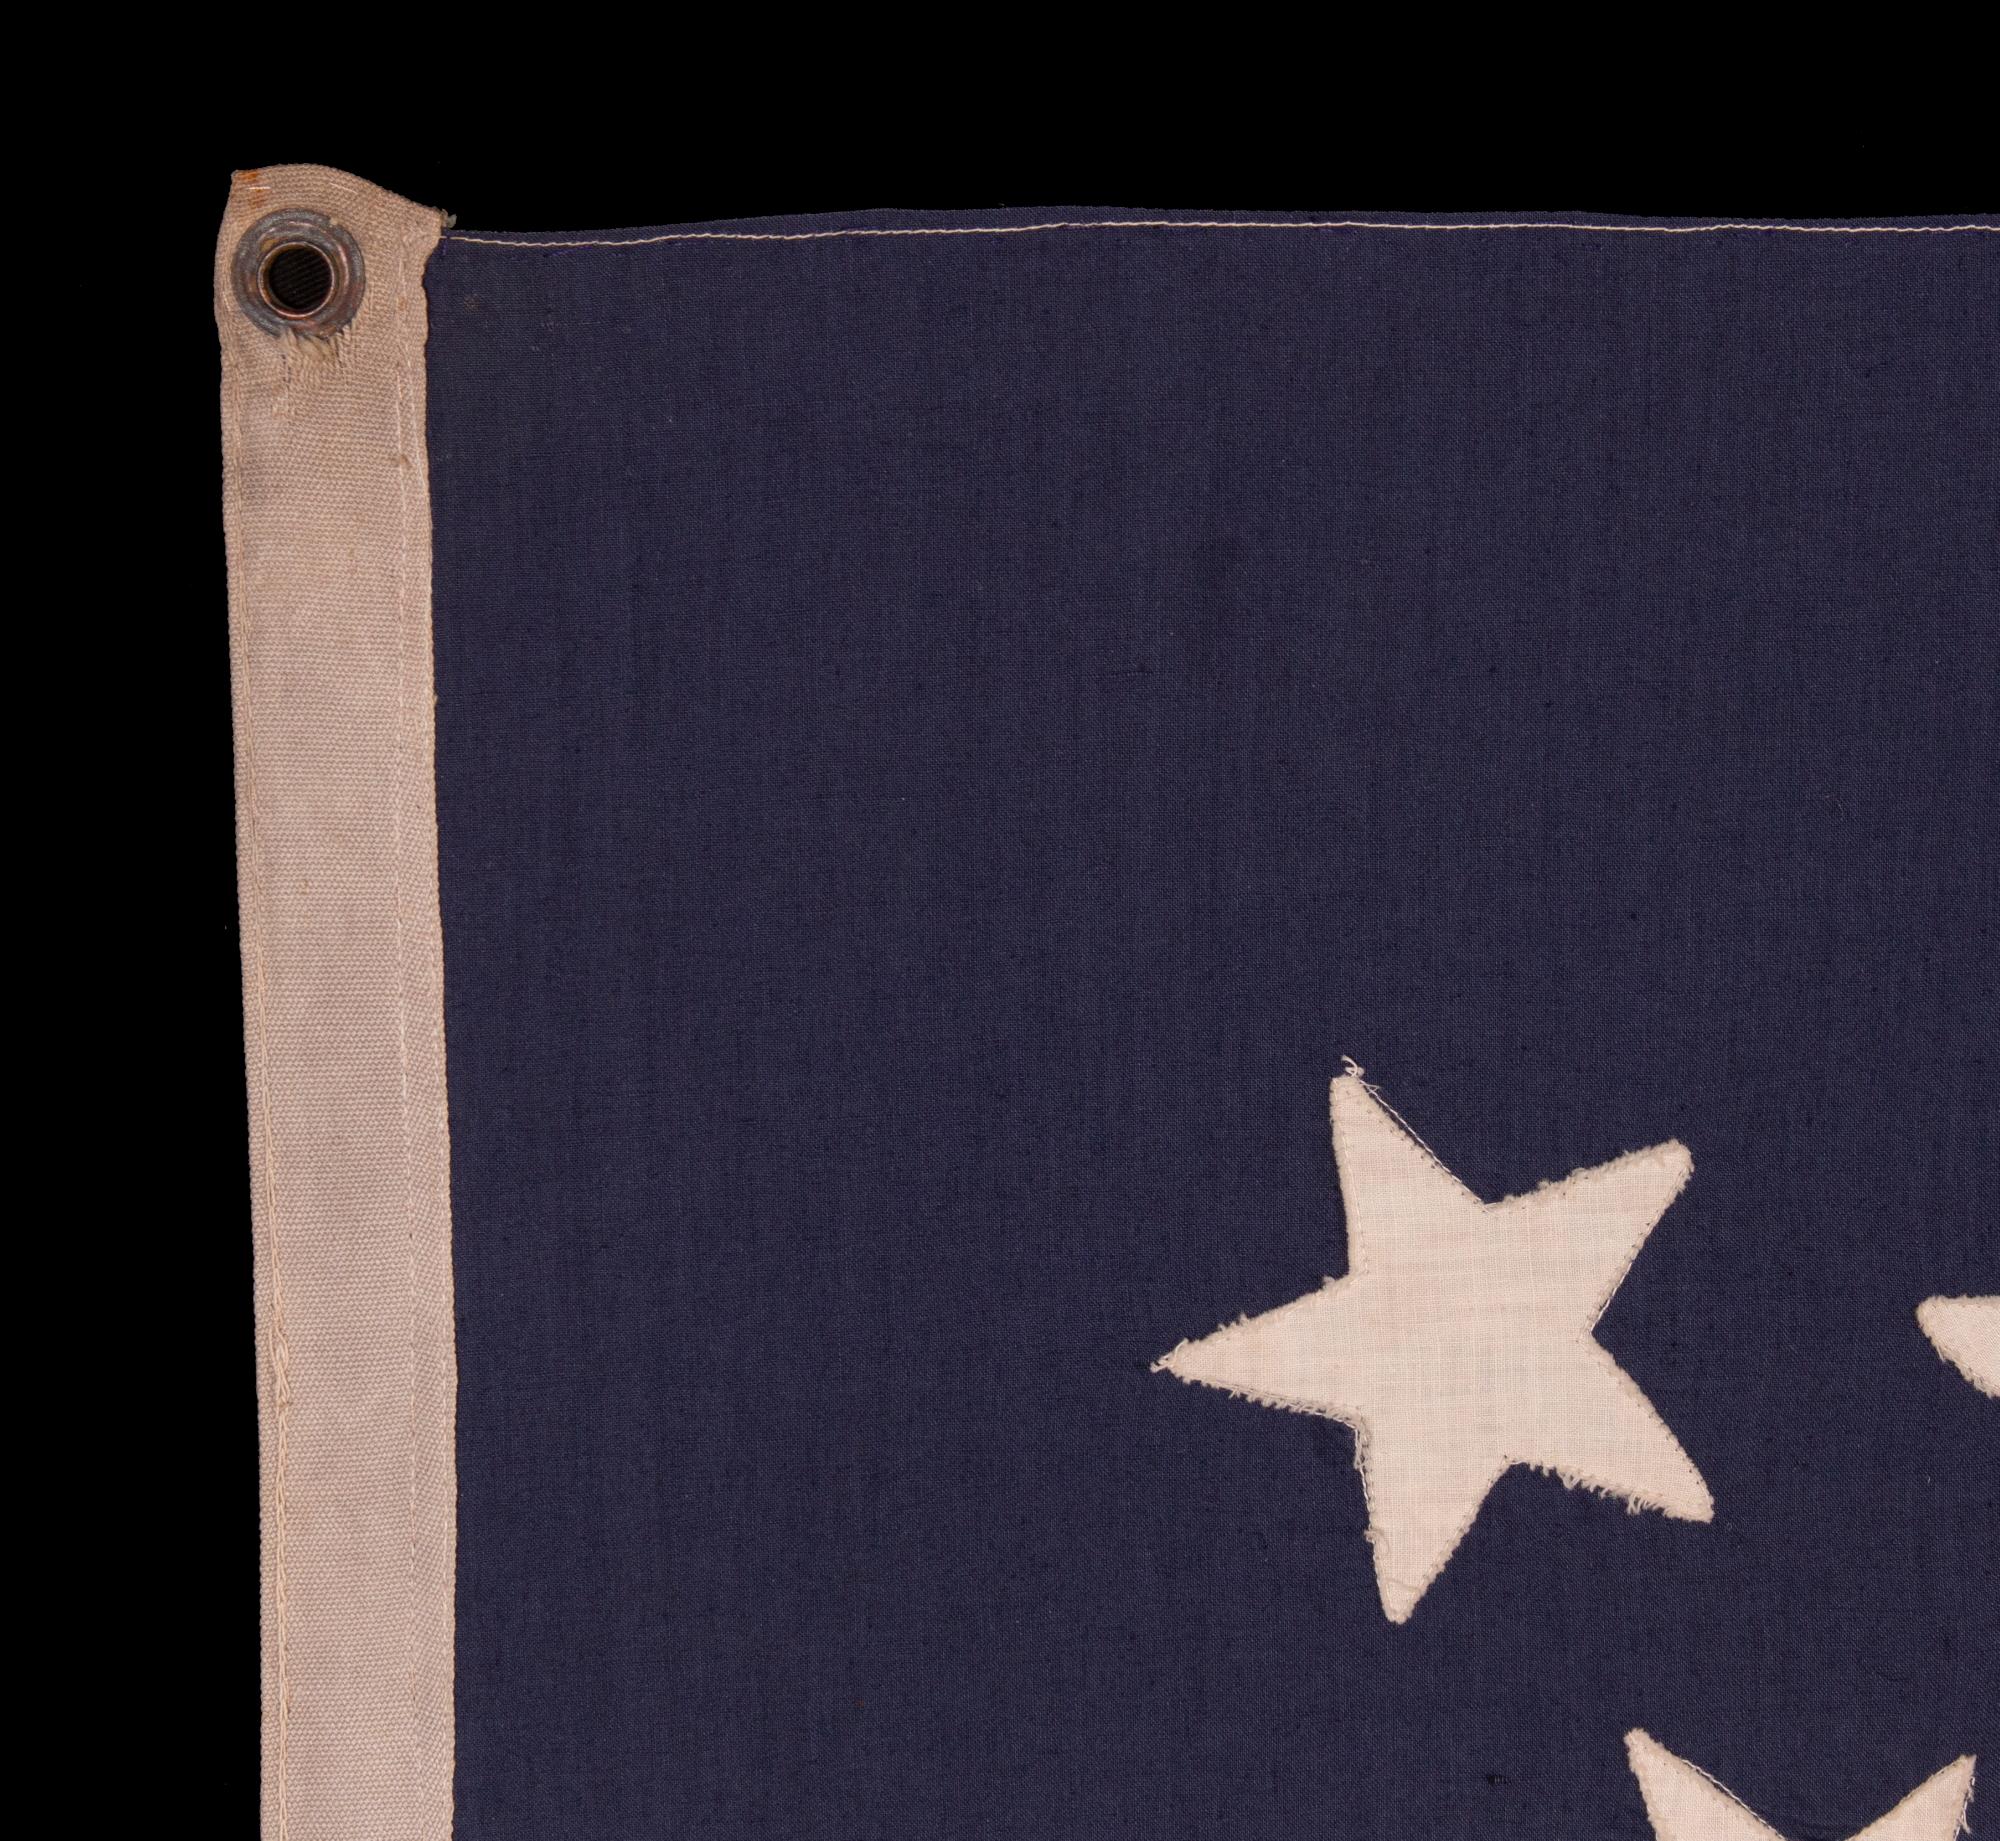 Cotton 15 Star Antique American Flag, Kentucky Statehood, Rare Star Configuration